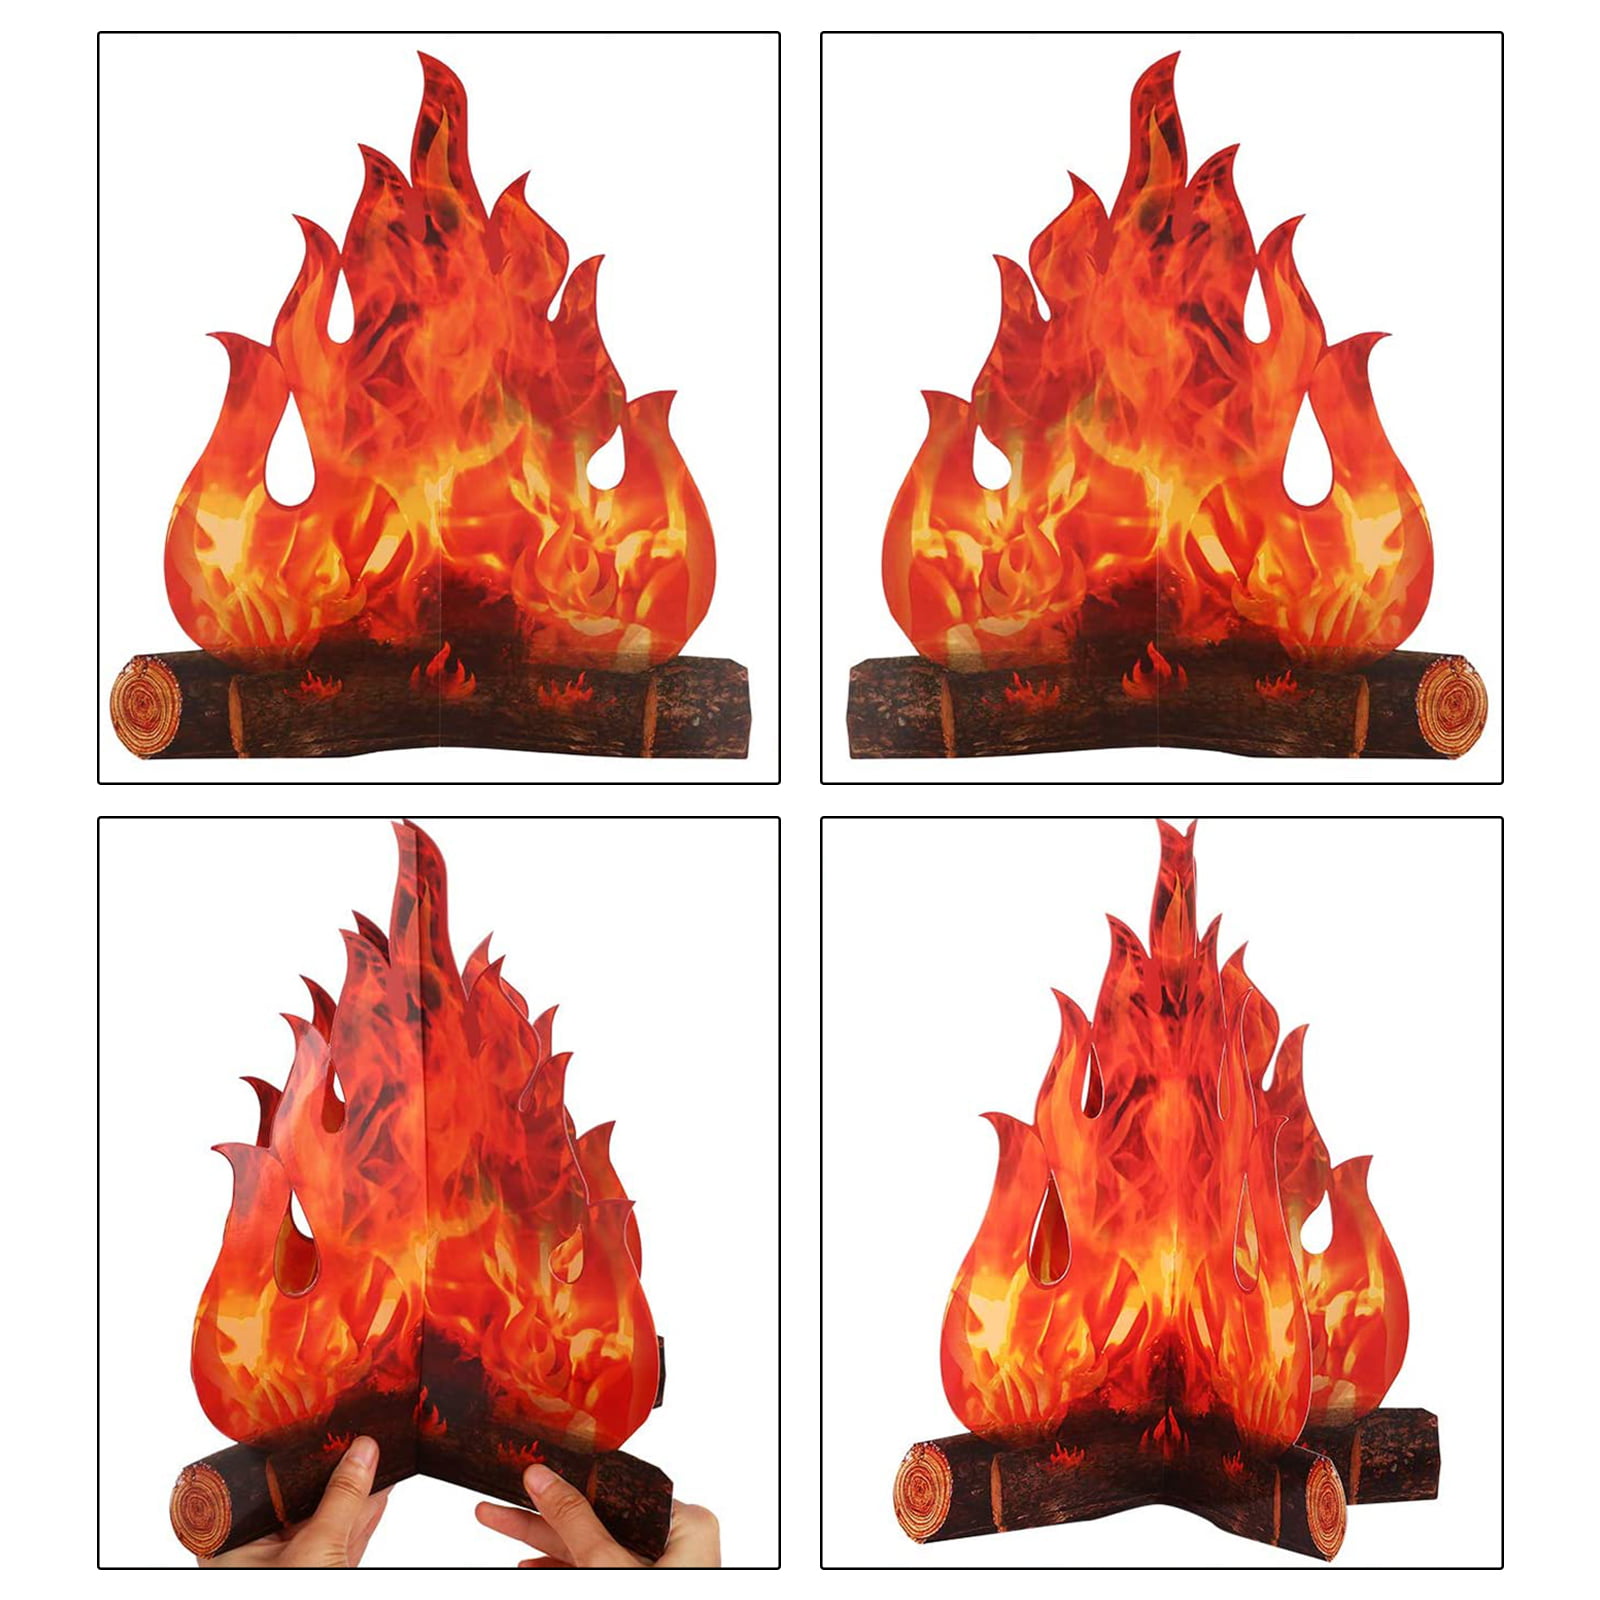 Artificial Fire Fake Flame Paper Party Decorative Flame Torch 3D Decorative Cardboard Campfire Centerpiece Decorative Logs For Fireplace Gusengo 3D Flame Halloween Decoration